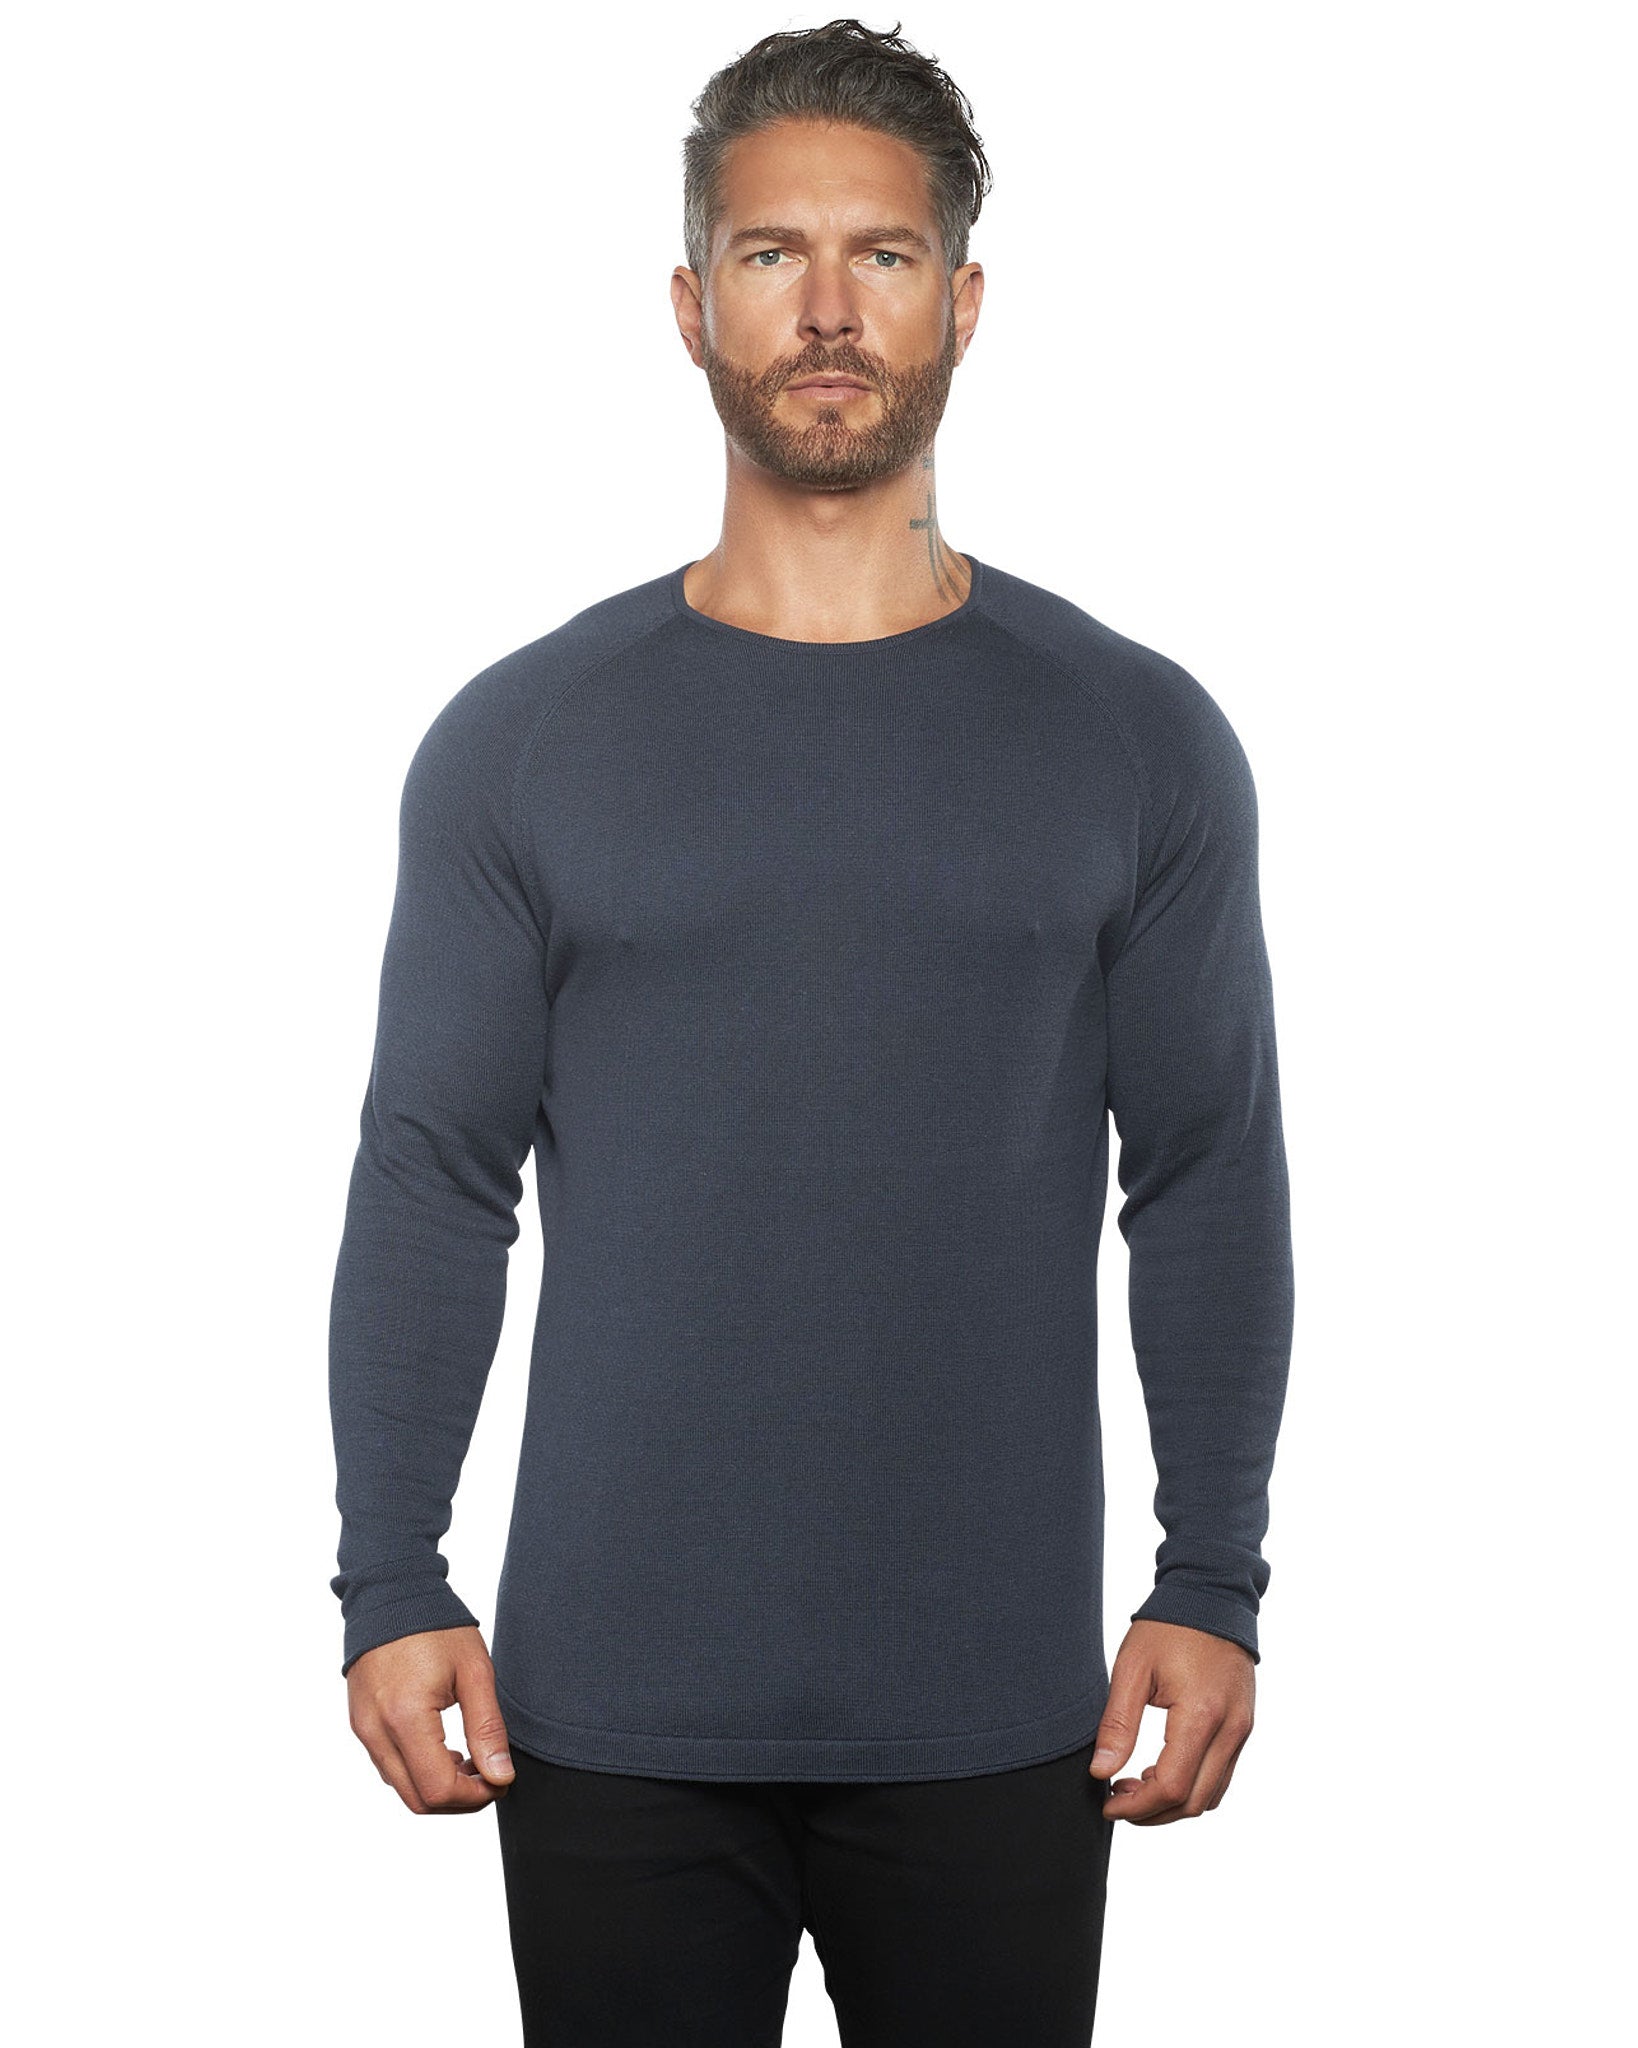 The Lightweight Slim Fit Sweater - WESTON JON BOUCHÉR